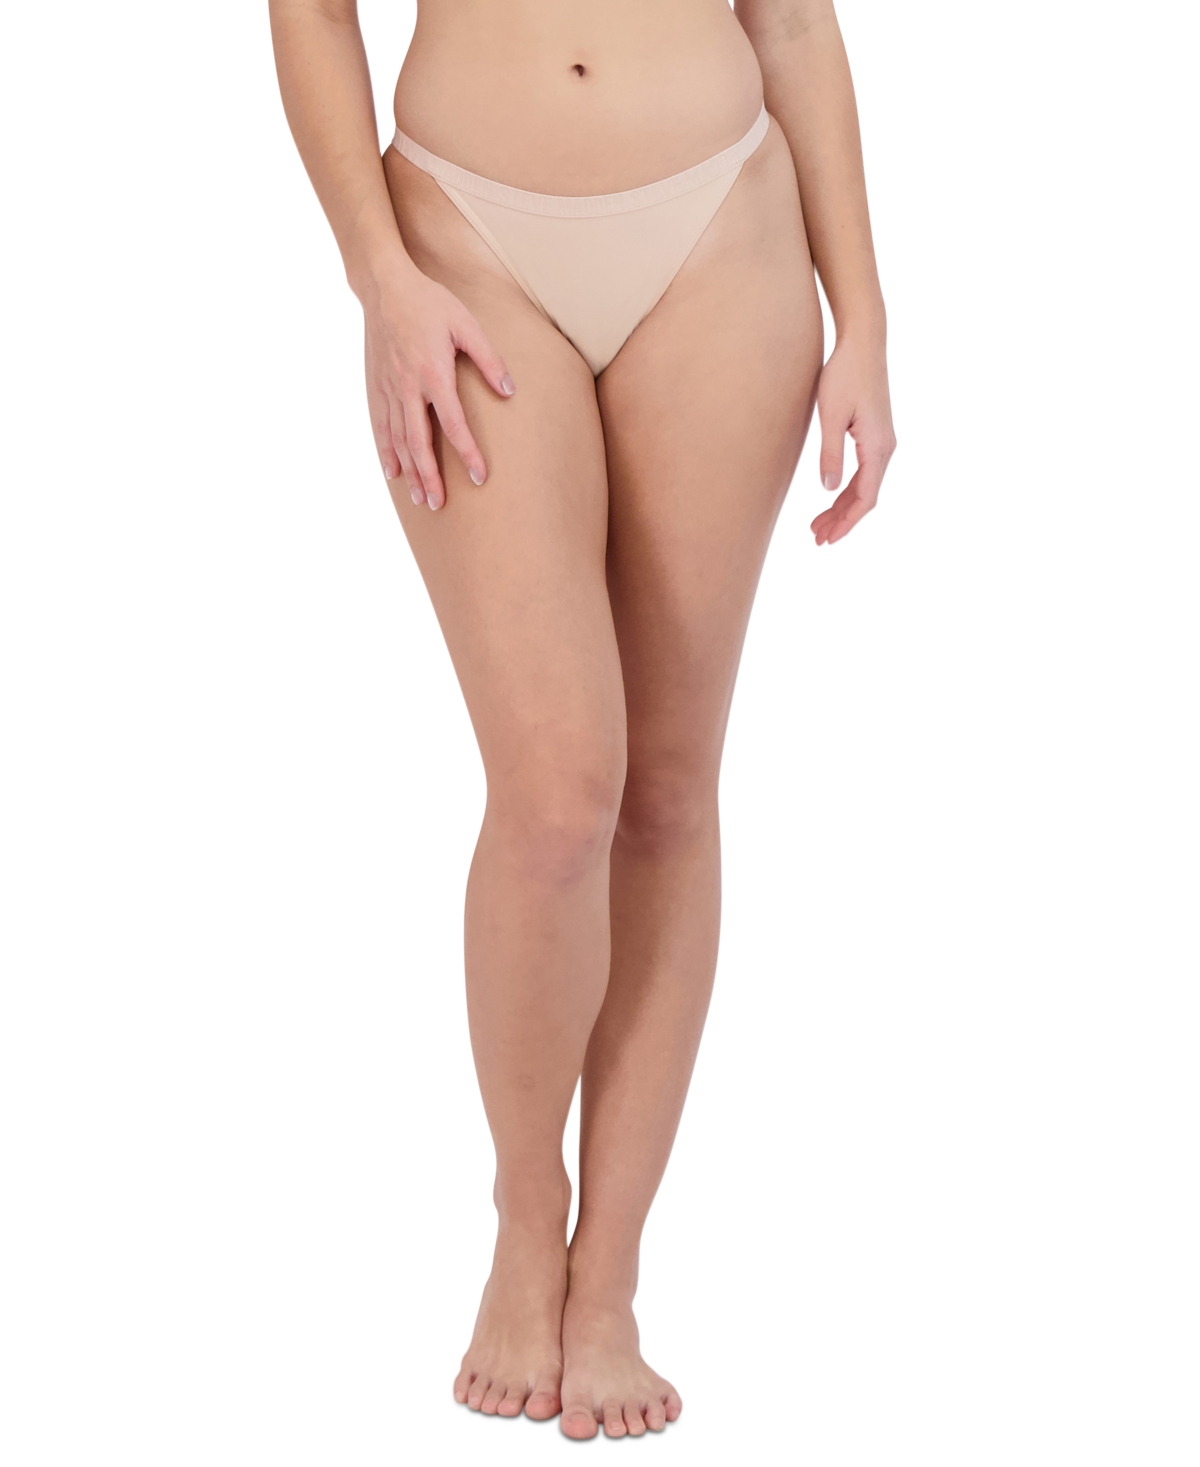 Steve Madden Women's Micro String Bikini Underwear SM12177 - Rose Dust